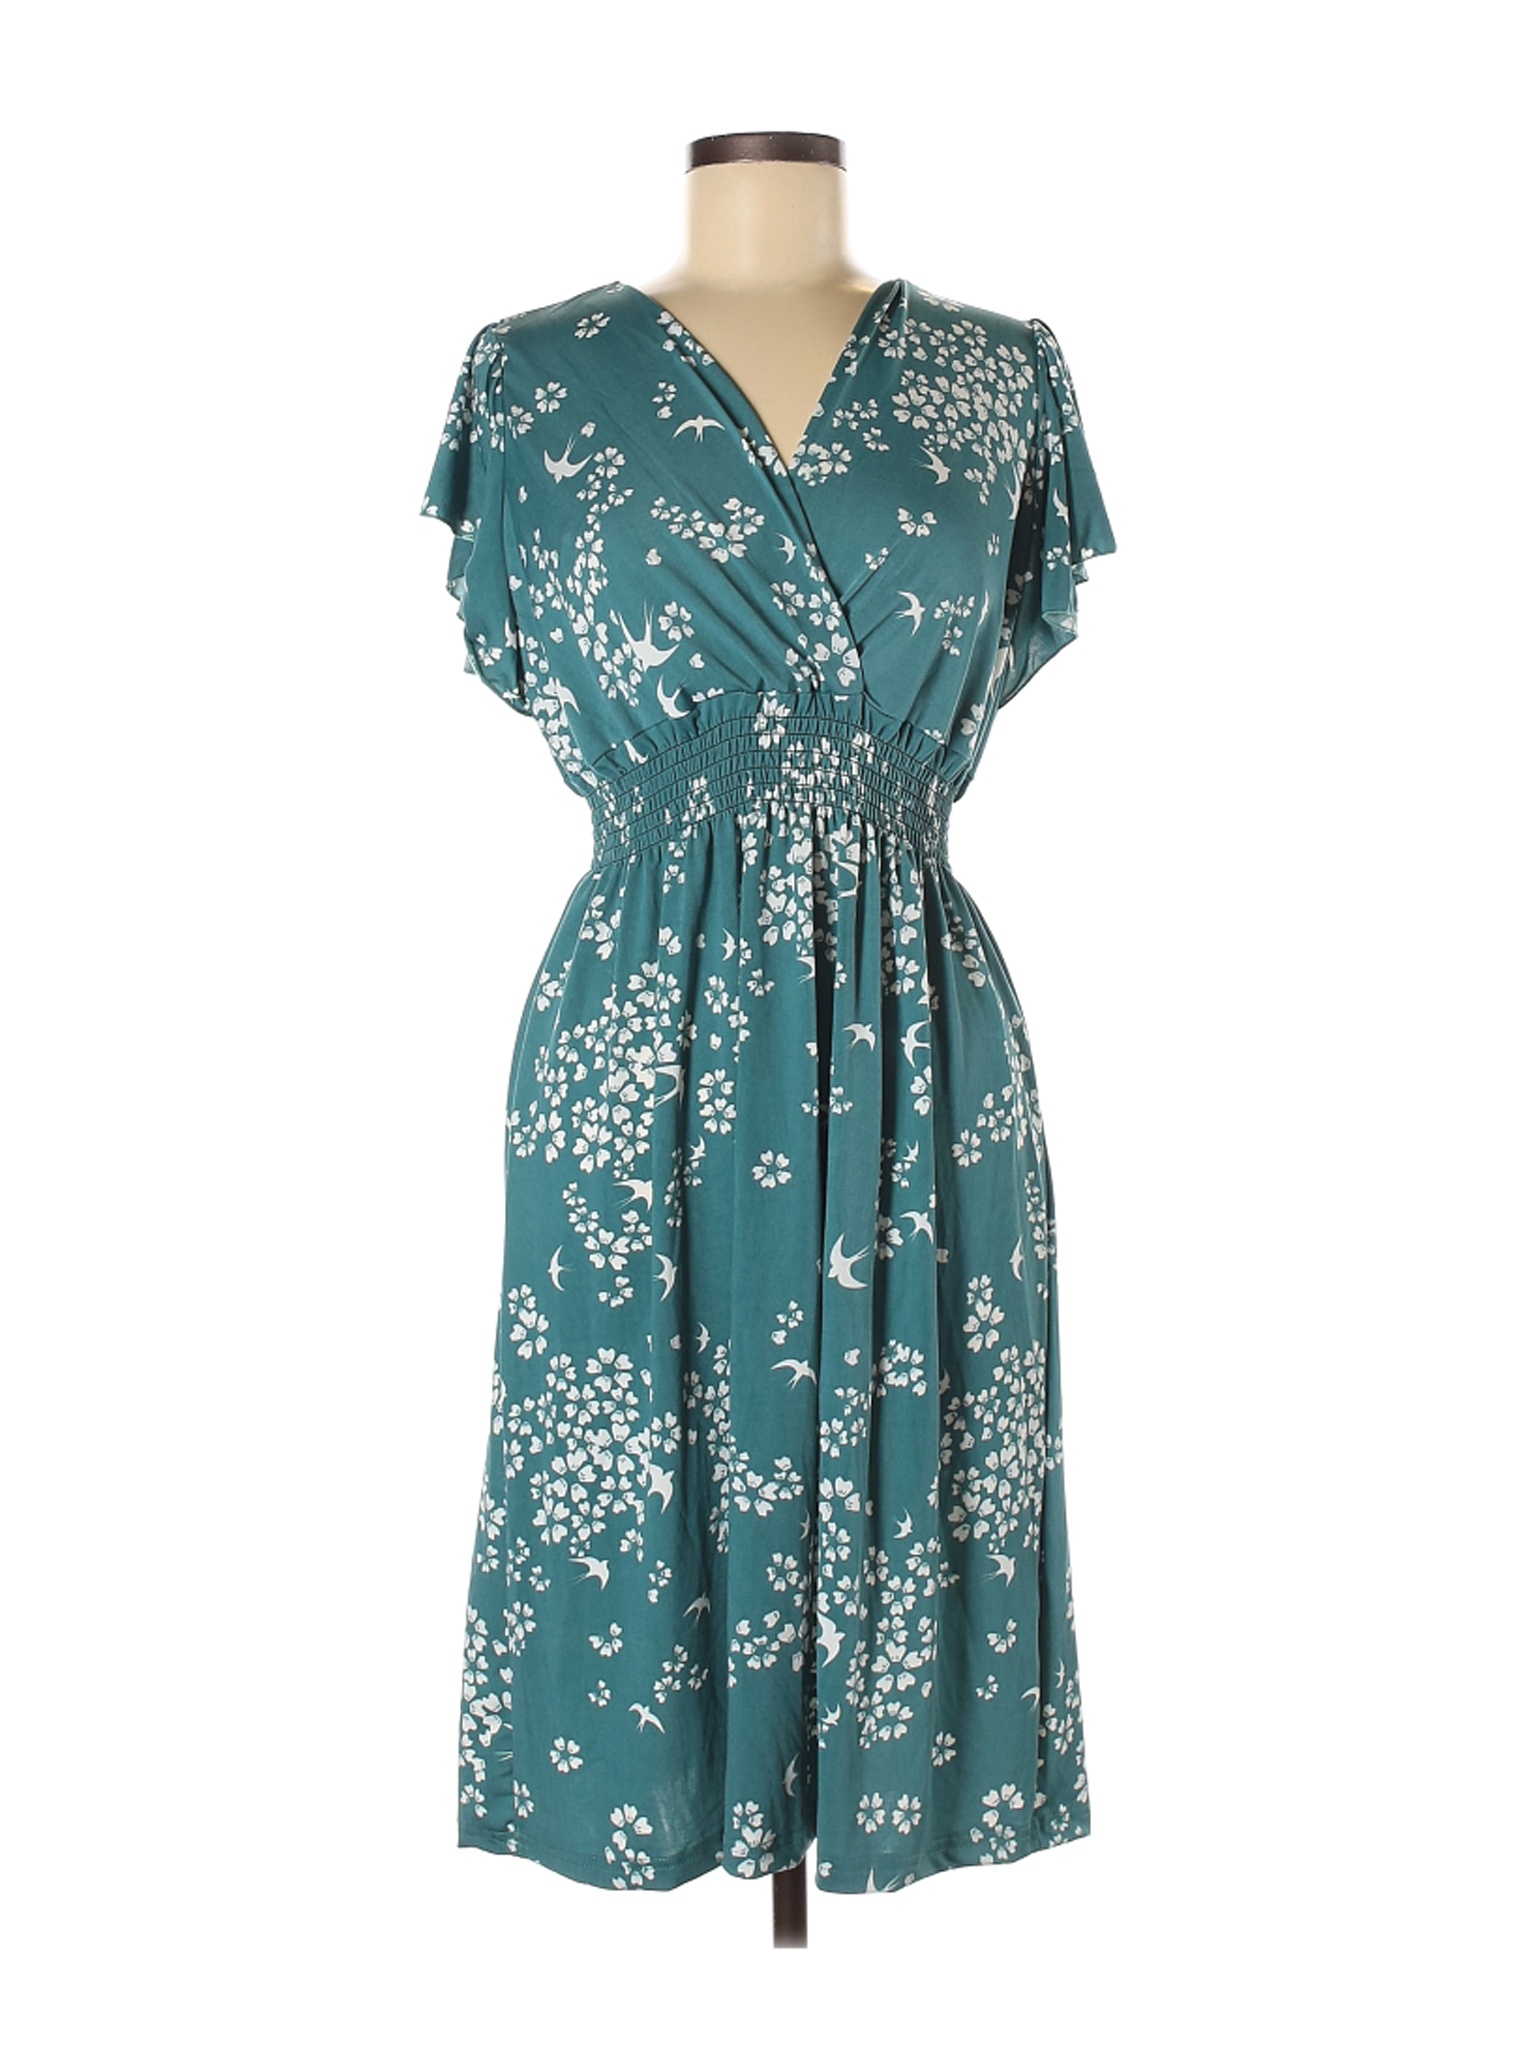 NWT Jon & Anna Women Green Casual Dress M | eBay